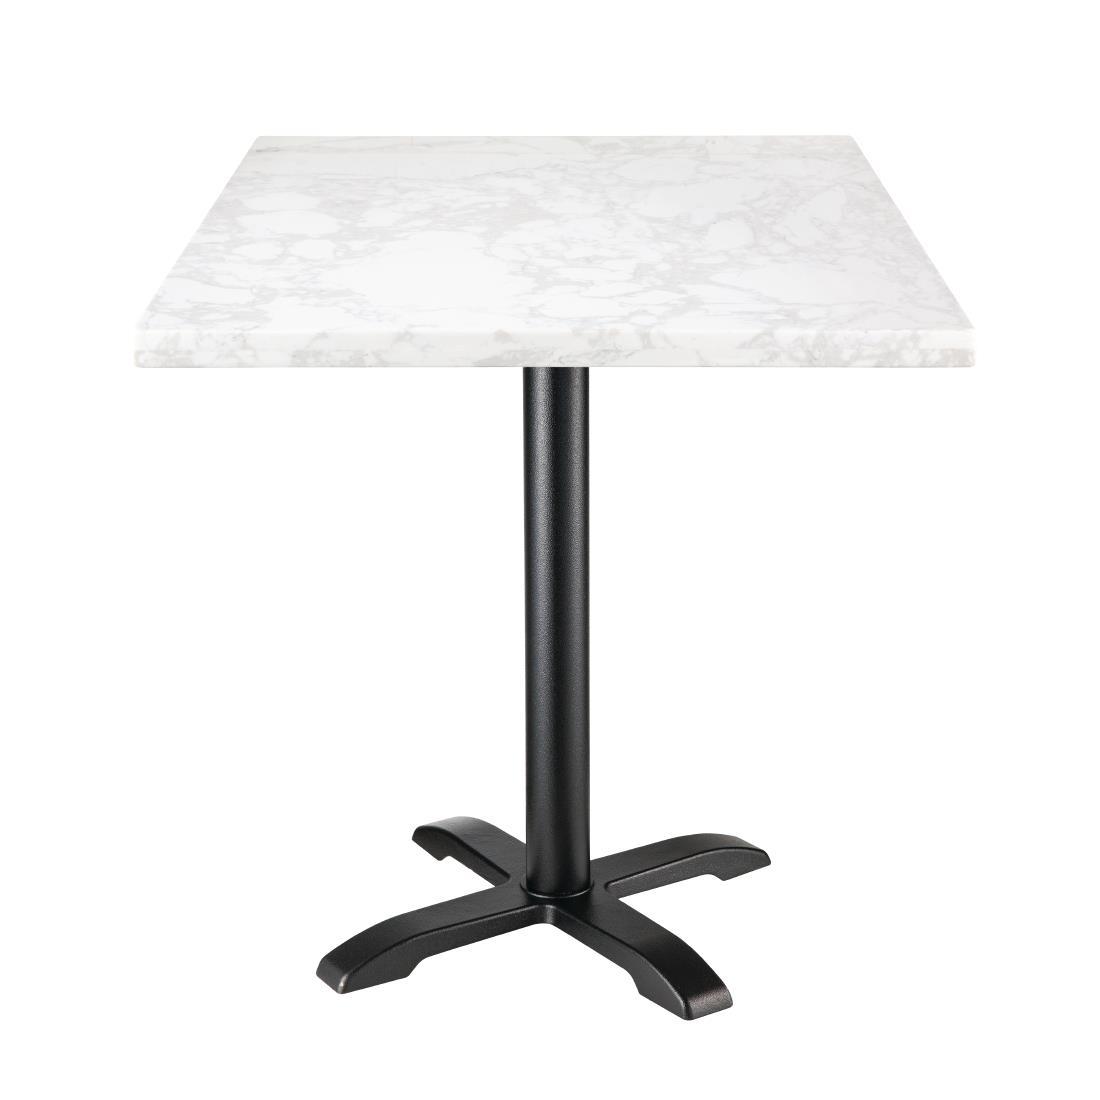 Bolero Square Marble Effect Table Top White 600mm - DC301  - 1